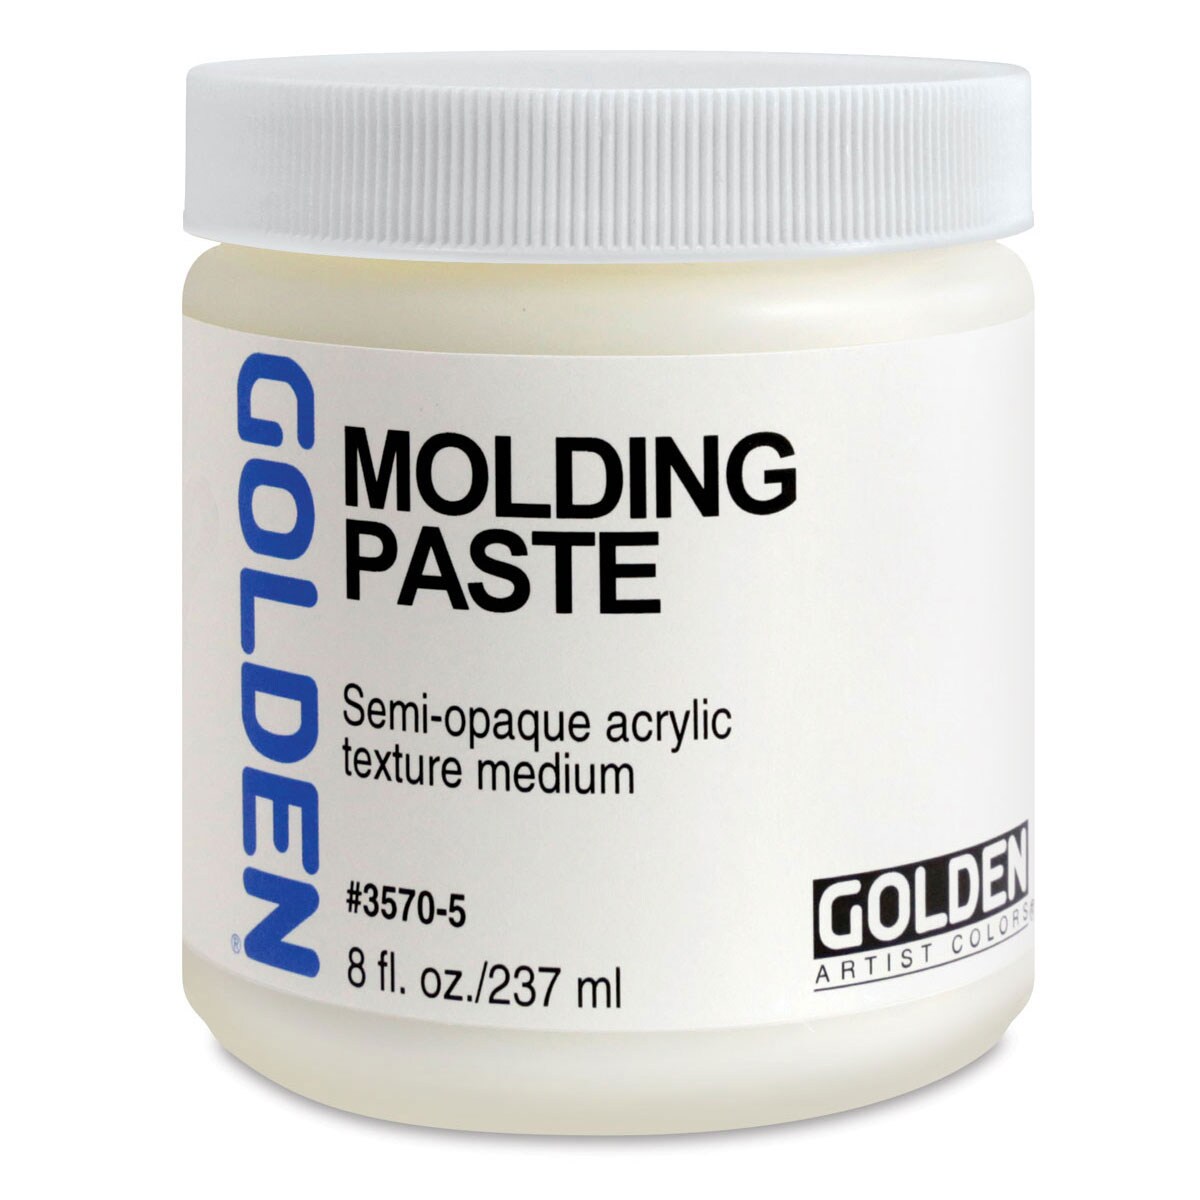 Golden-Molding Paste, 8 oz jar